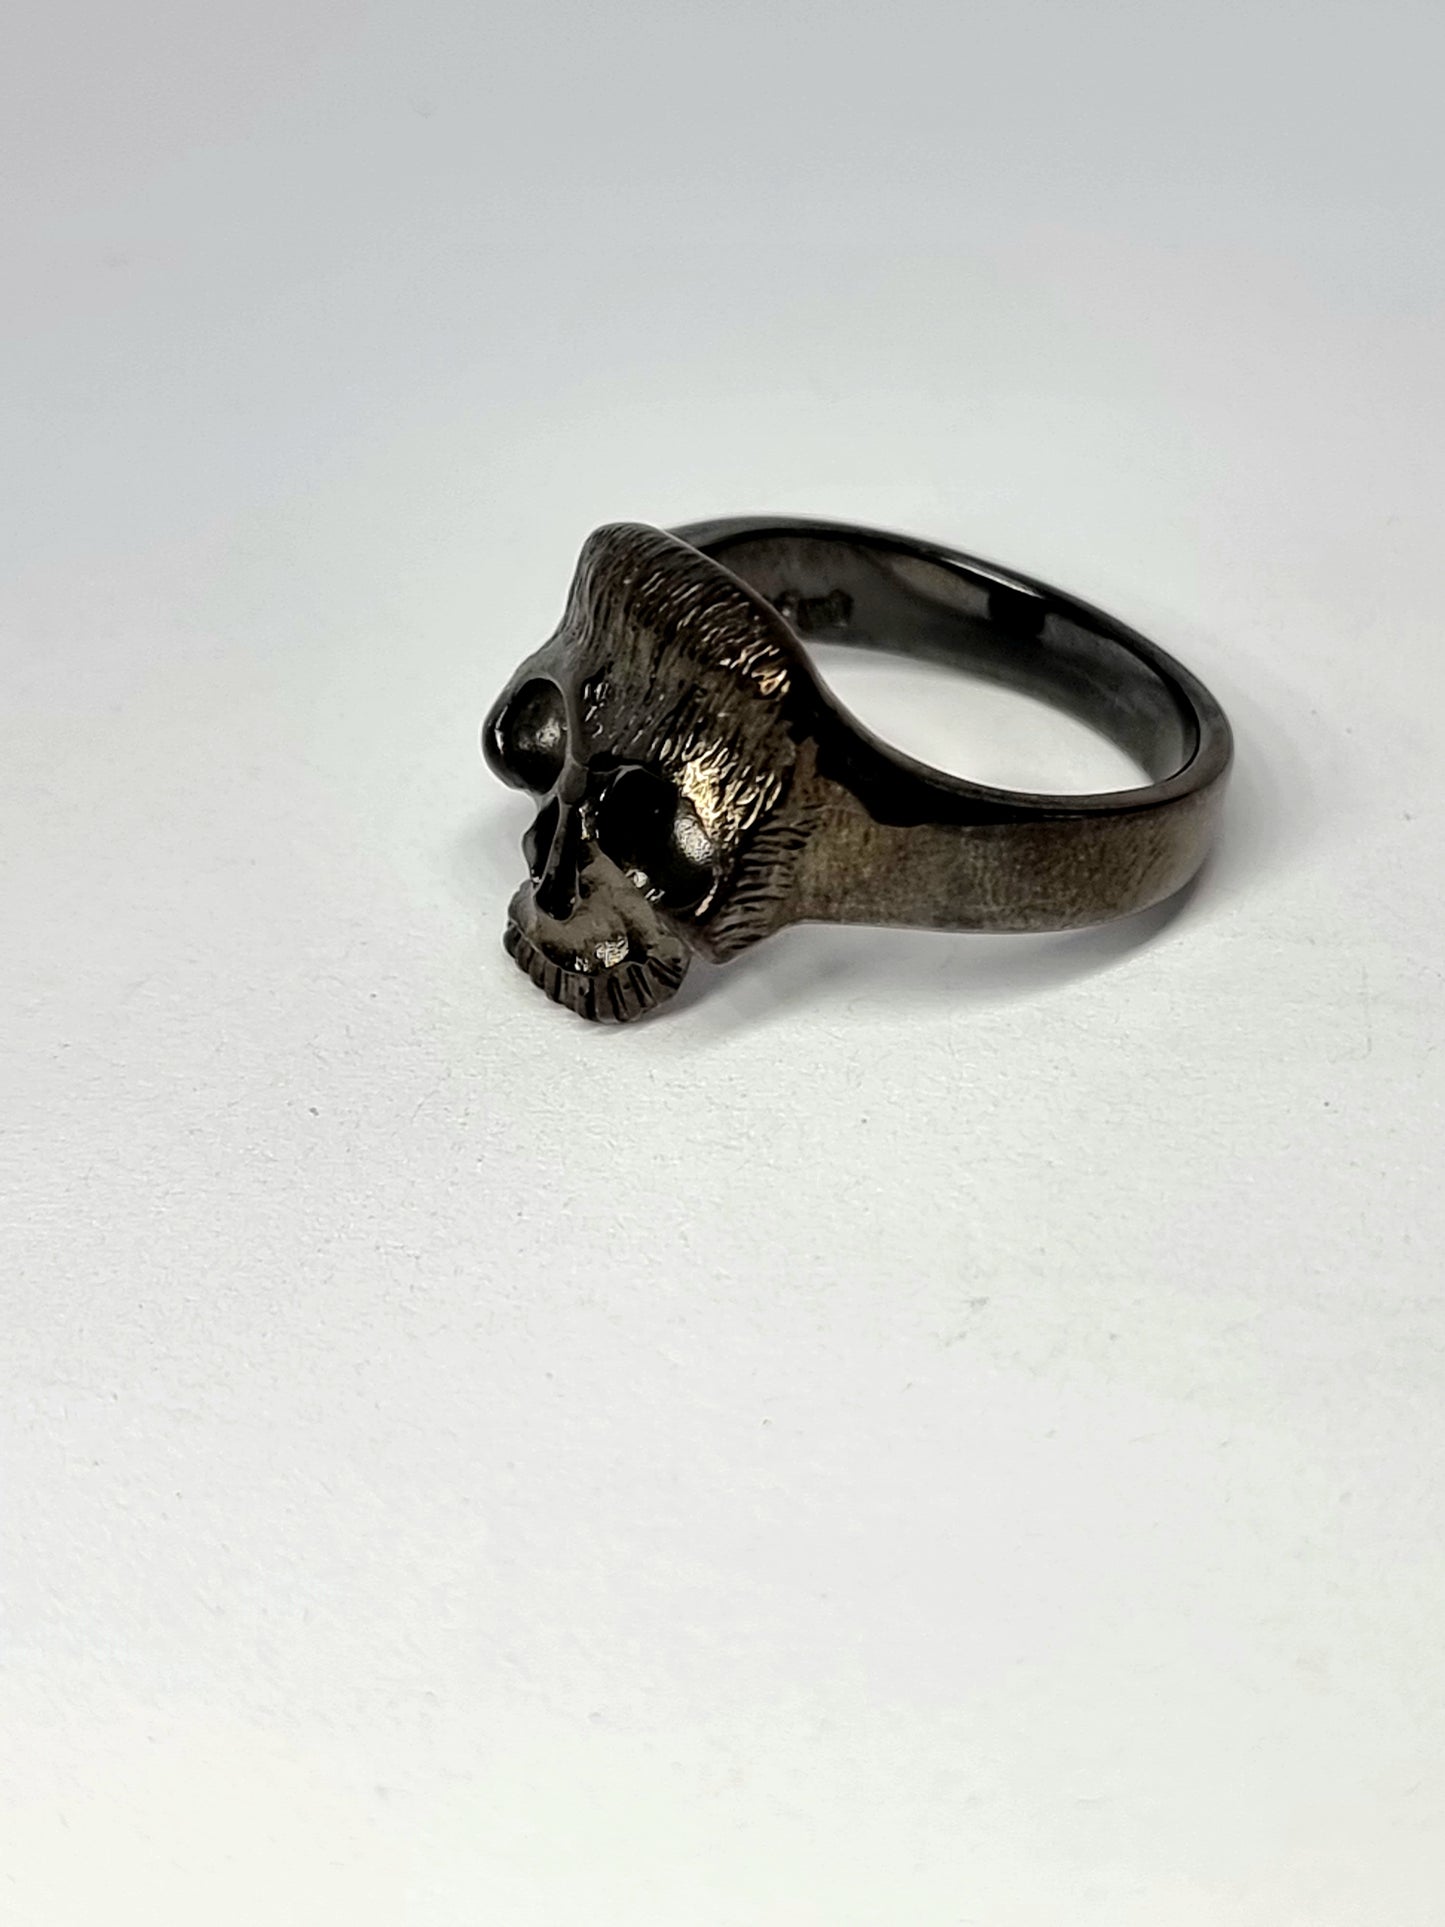 Skull Ring Black Rhodium Finished Silver